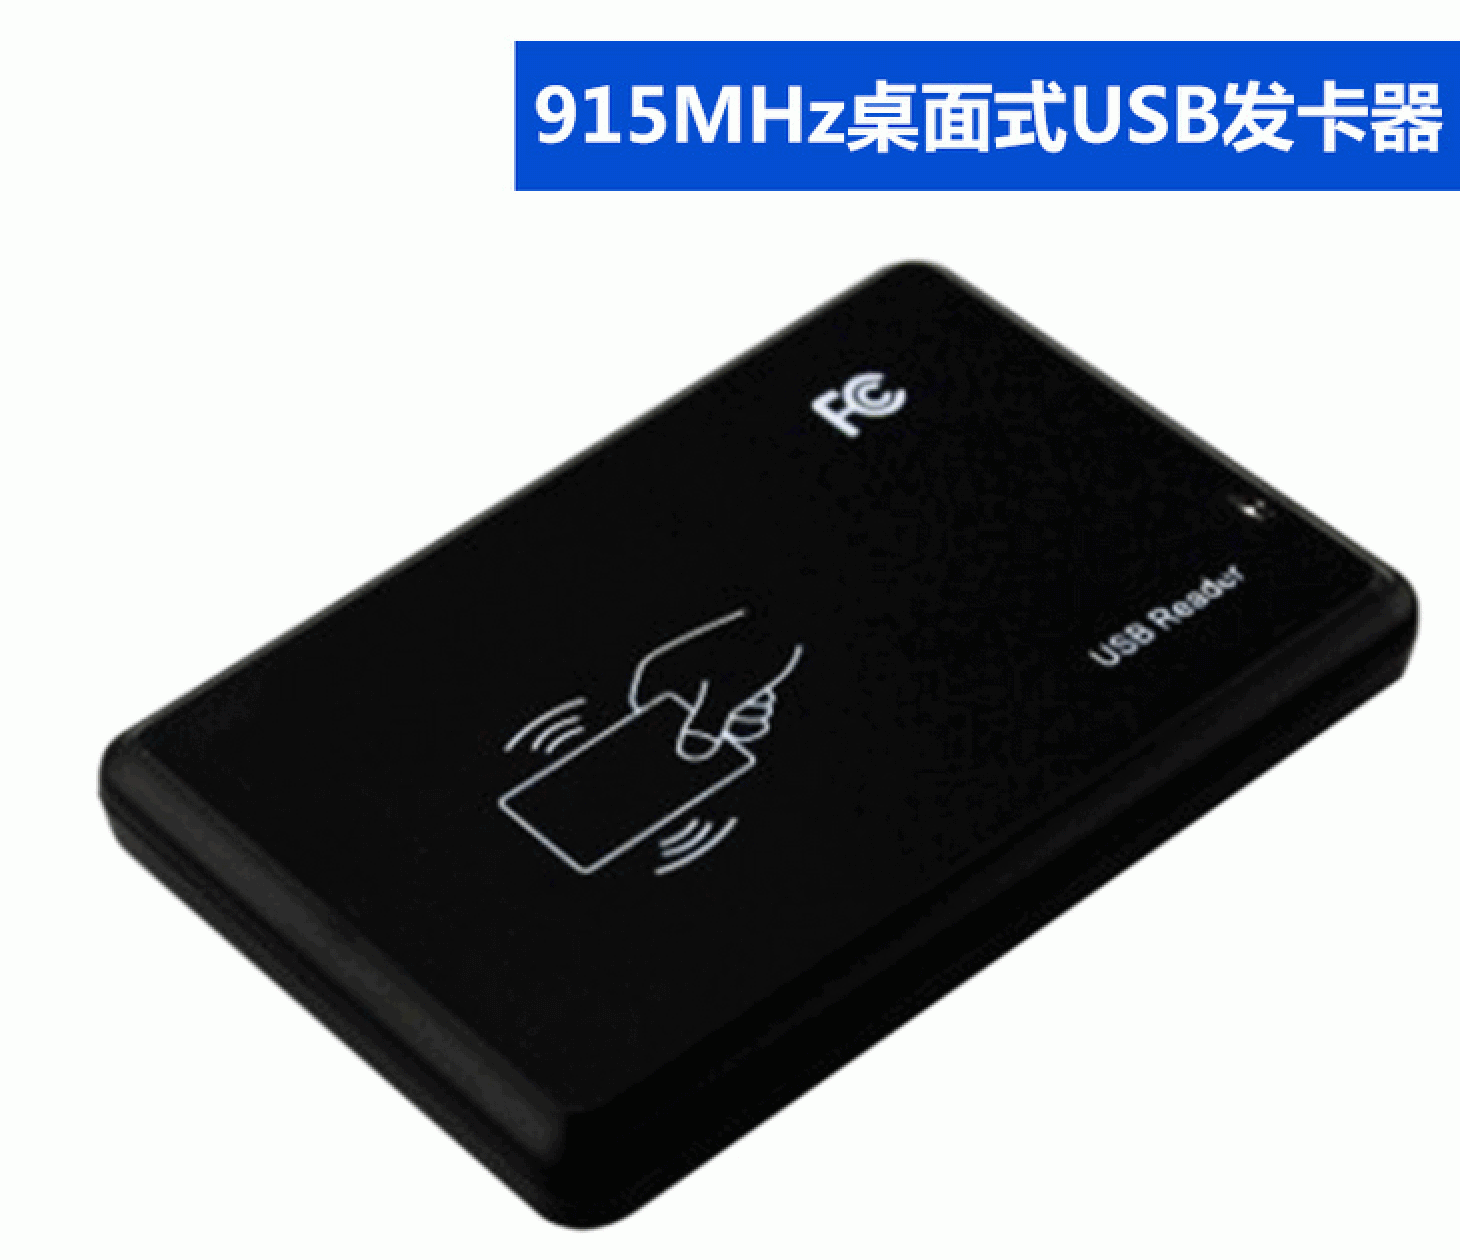 Double USB Rfid Uhf Desktop Card Reader and Writer